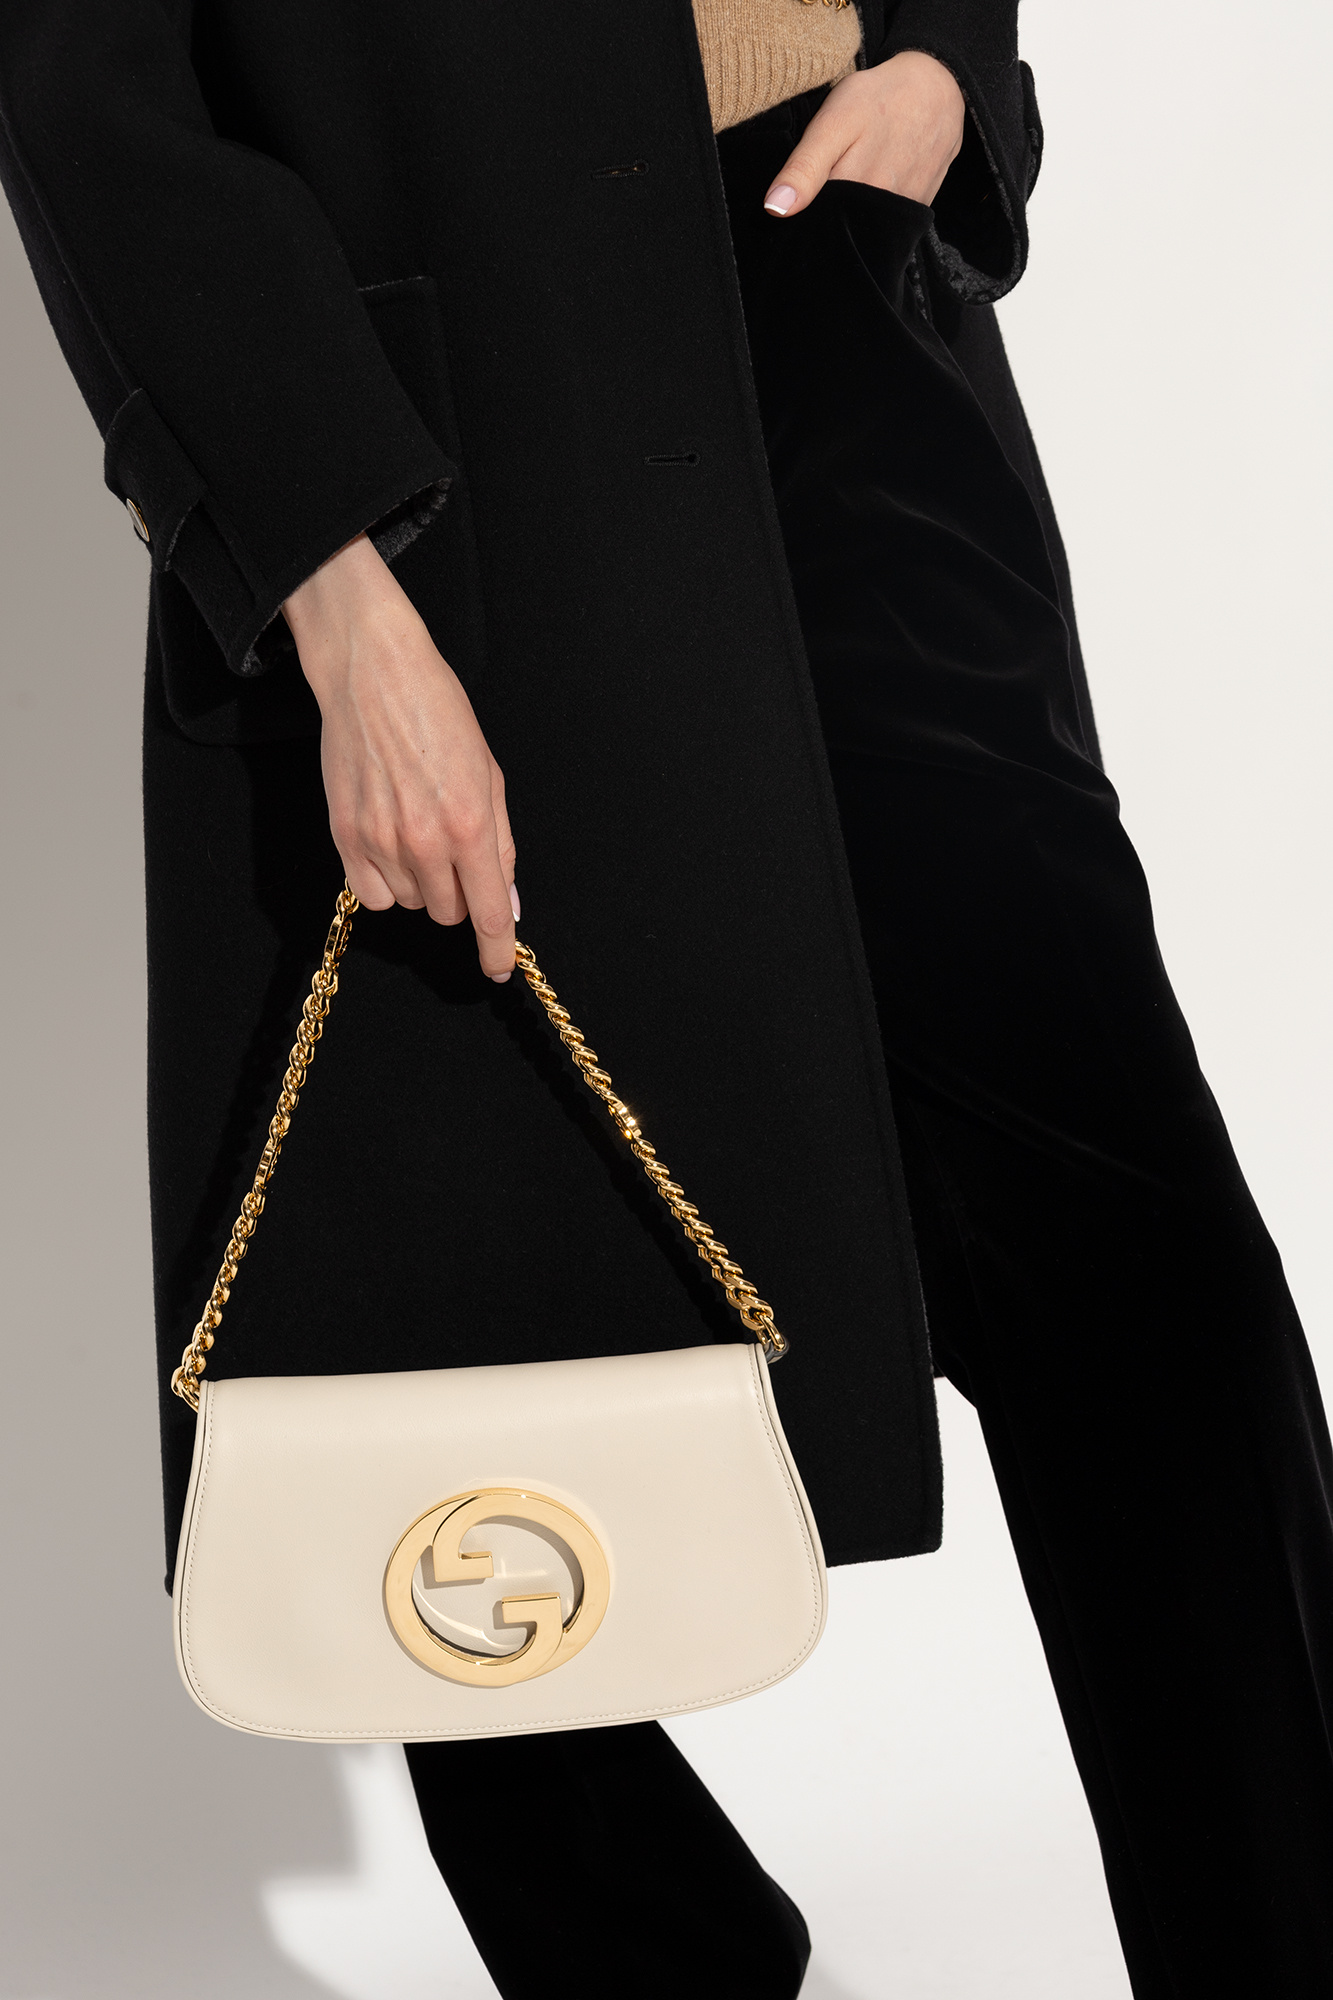 Gucci ‘Blondie’ shoulder bag